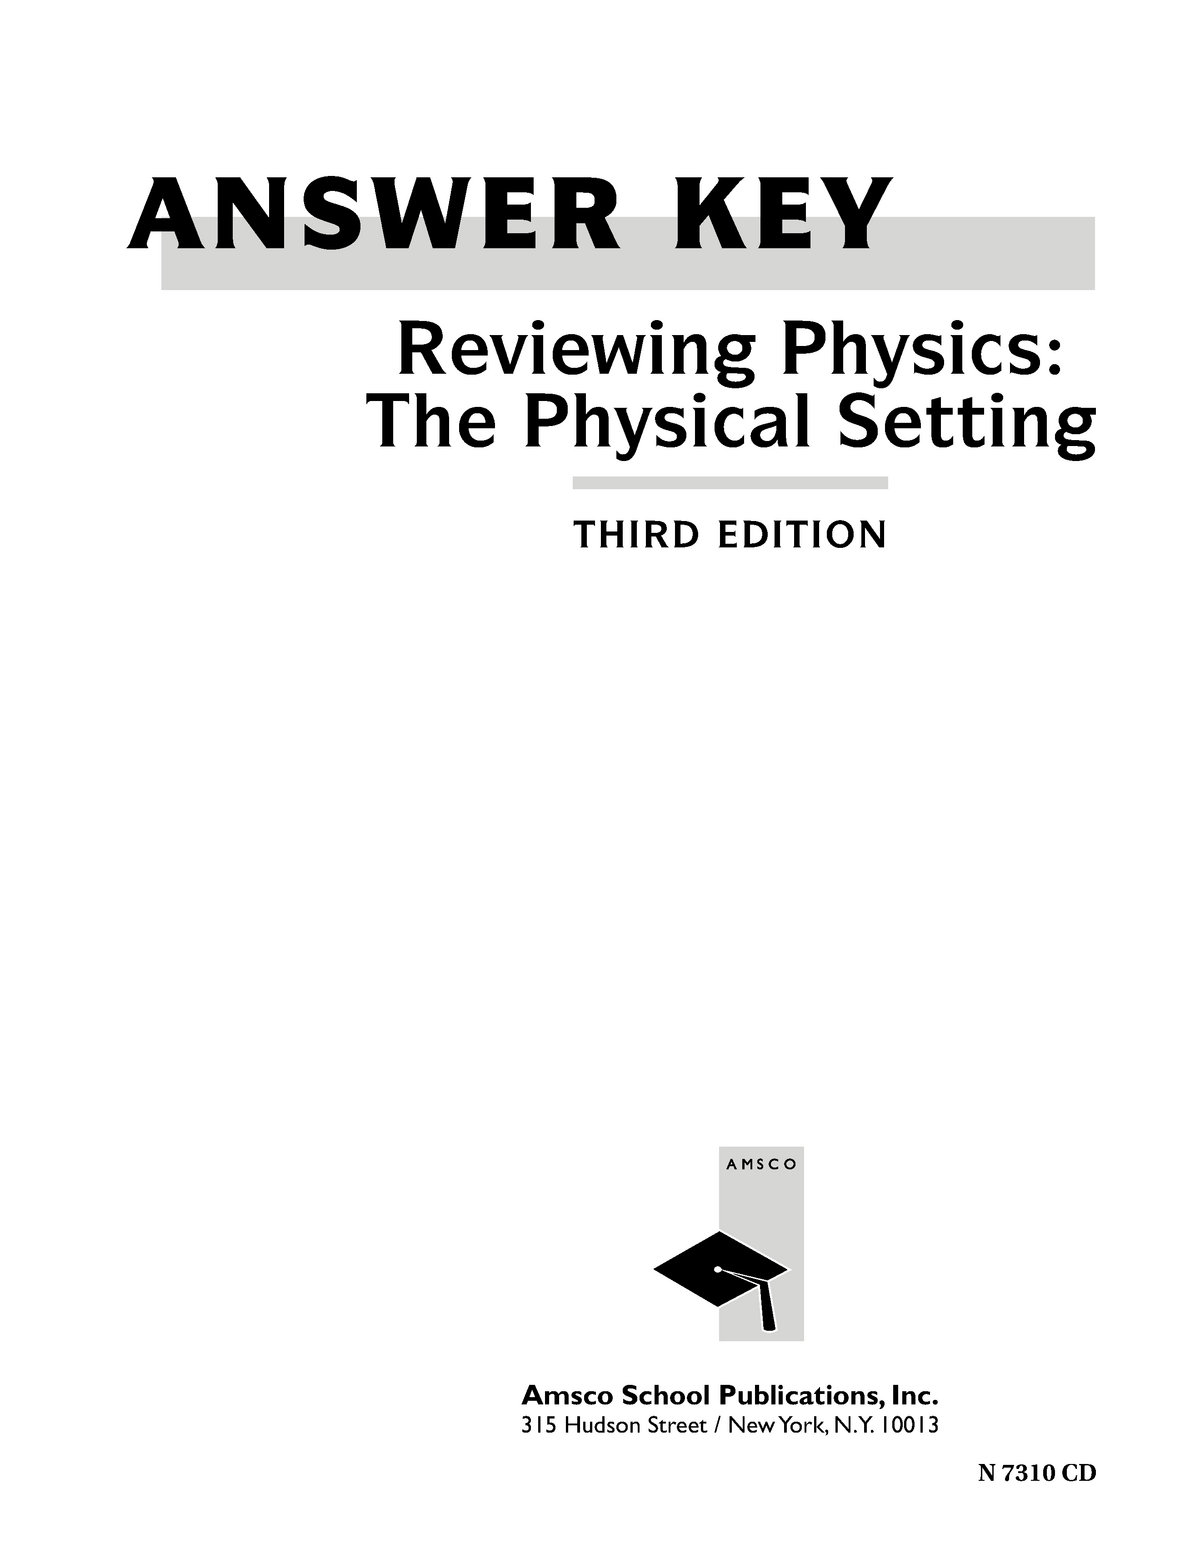 PhysicsAK ANSWER KEY Reviewing Physics The Physical Setting THIRD